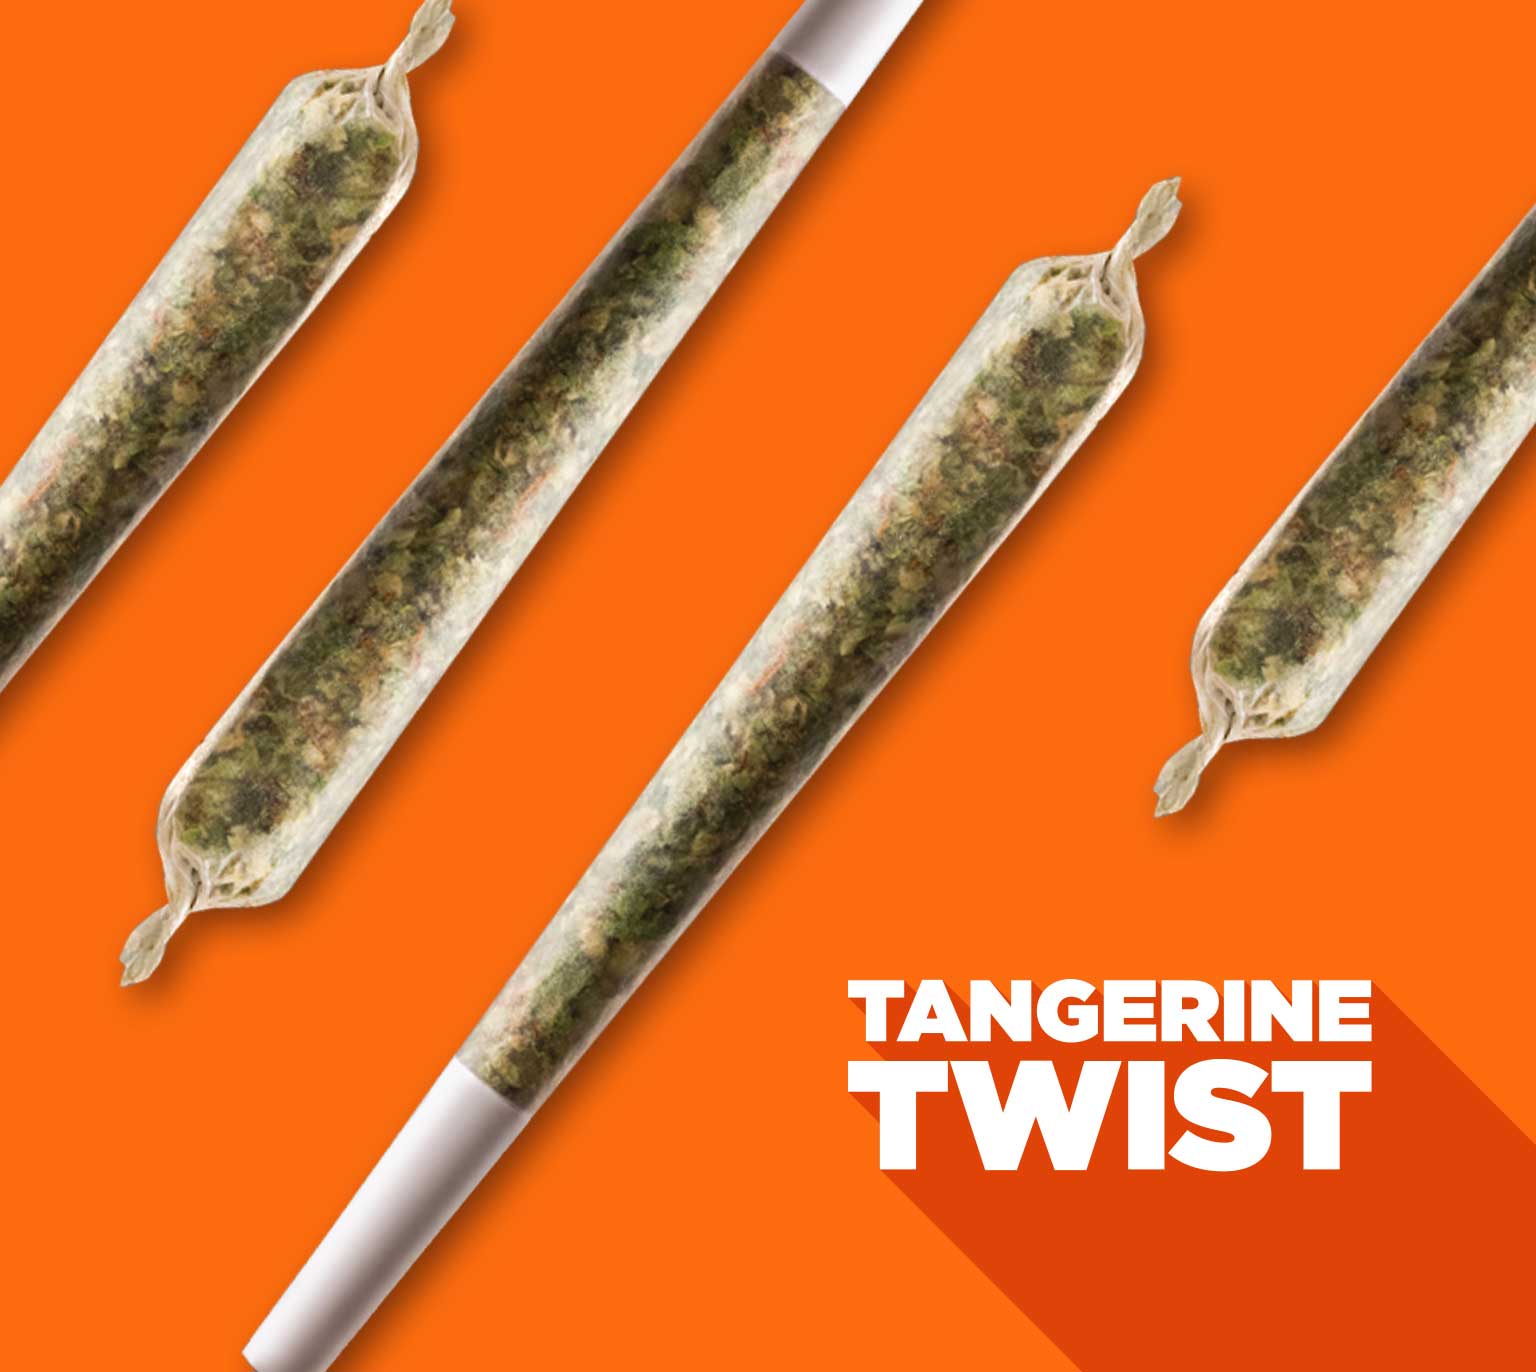 Tangerine Twist with roll